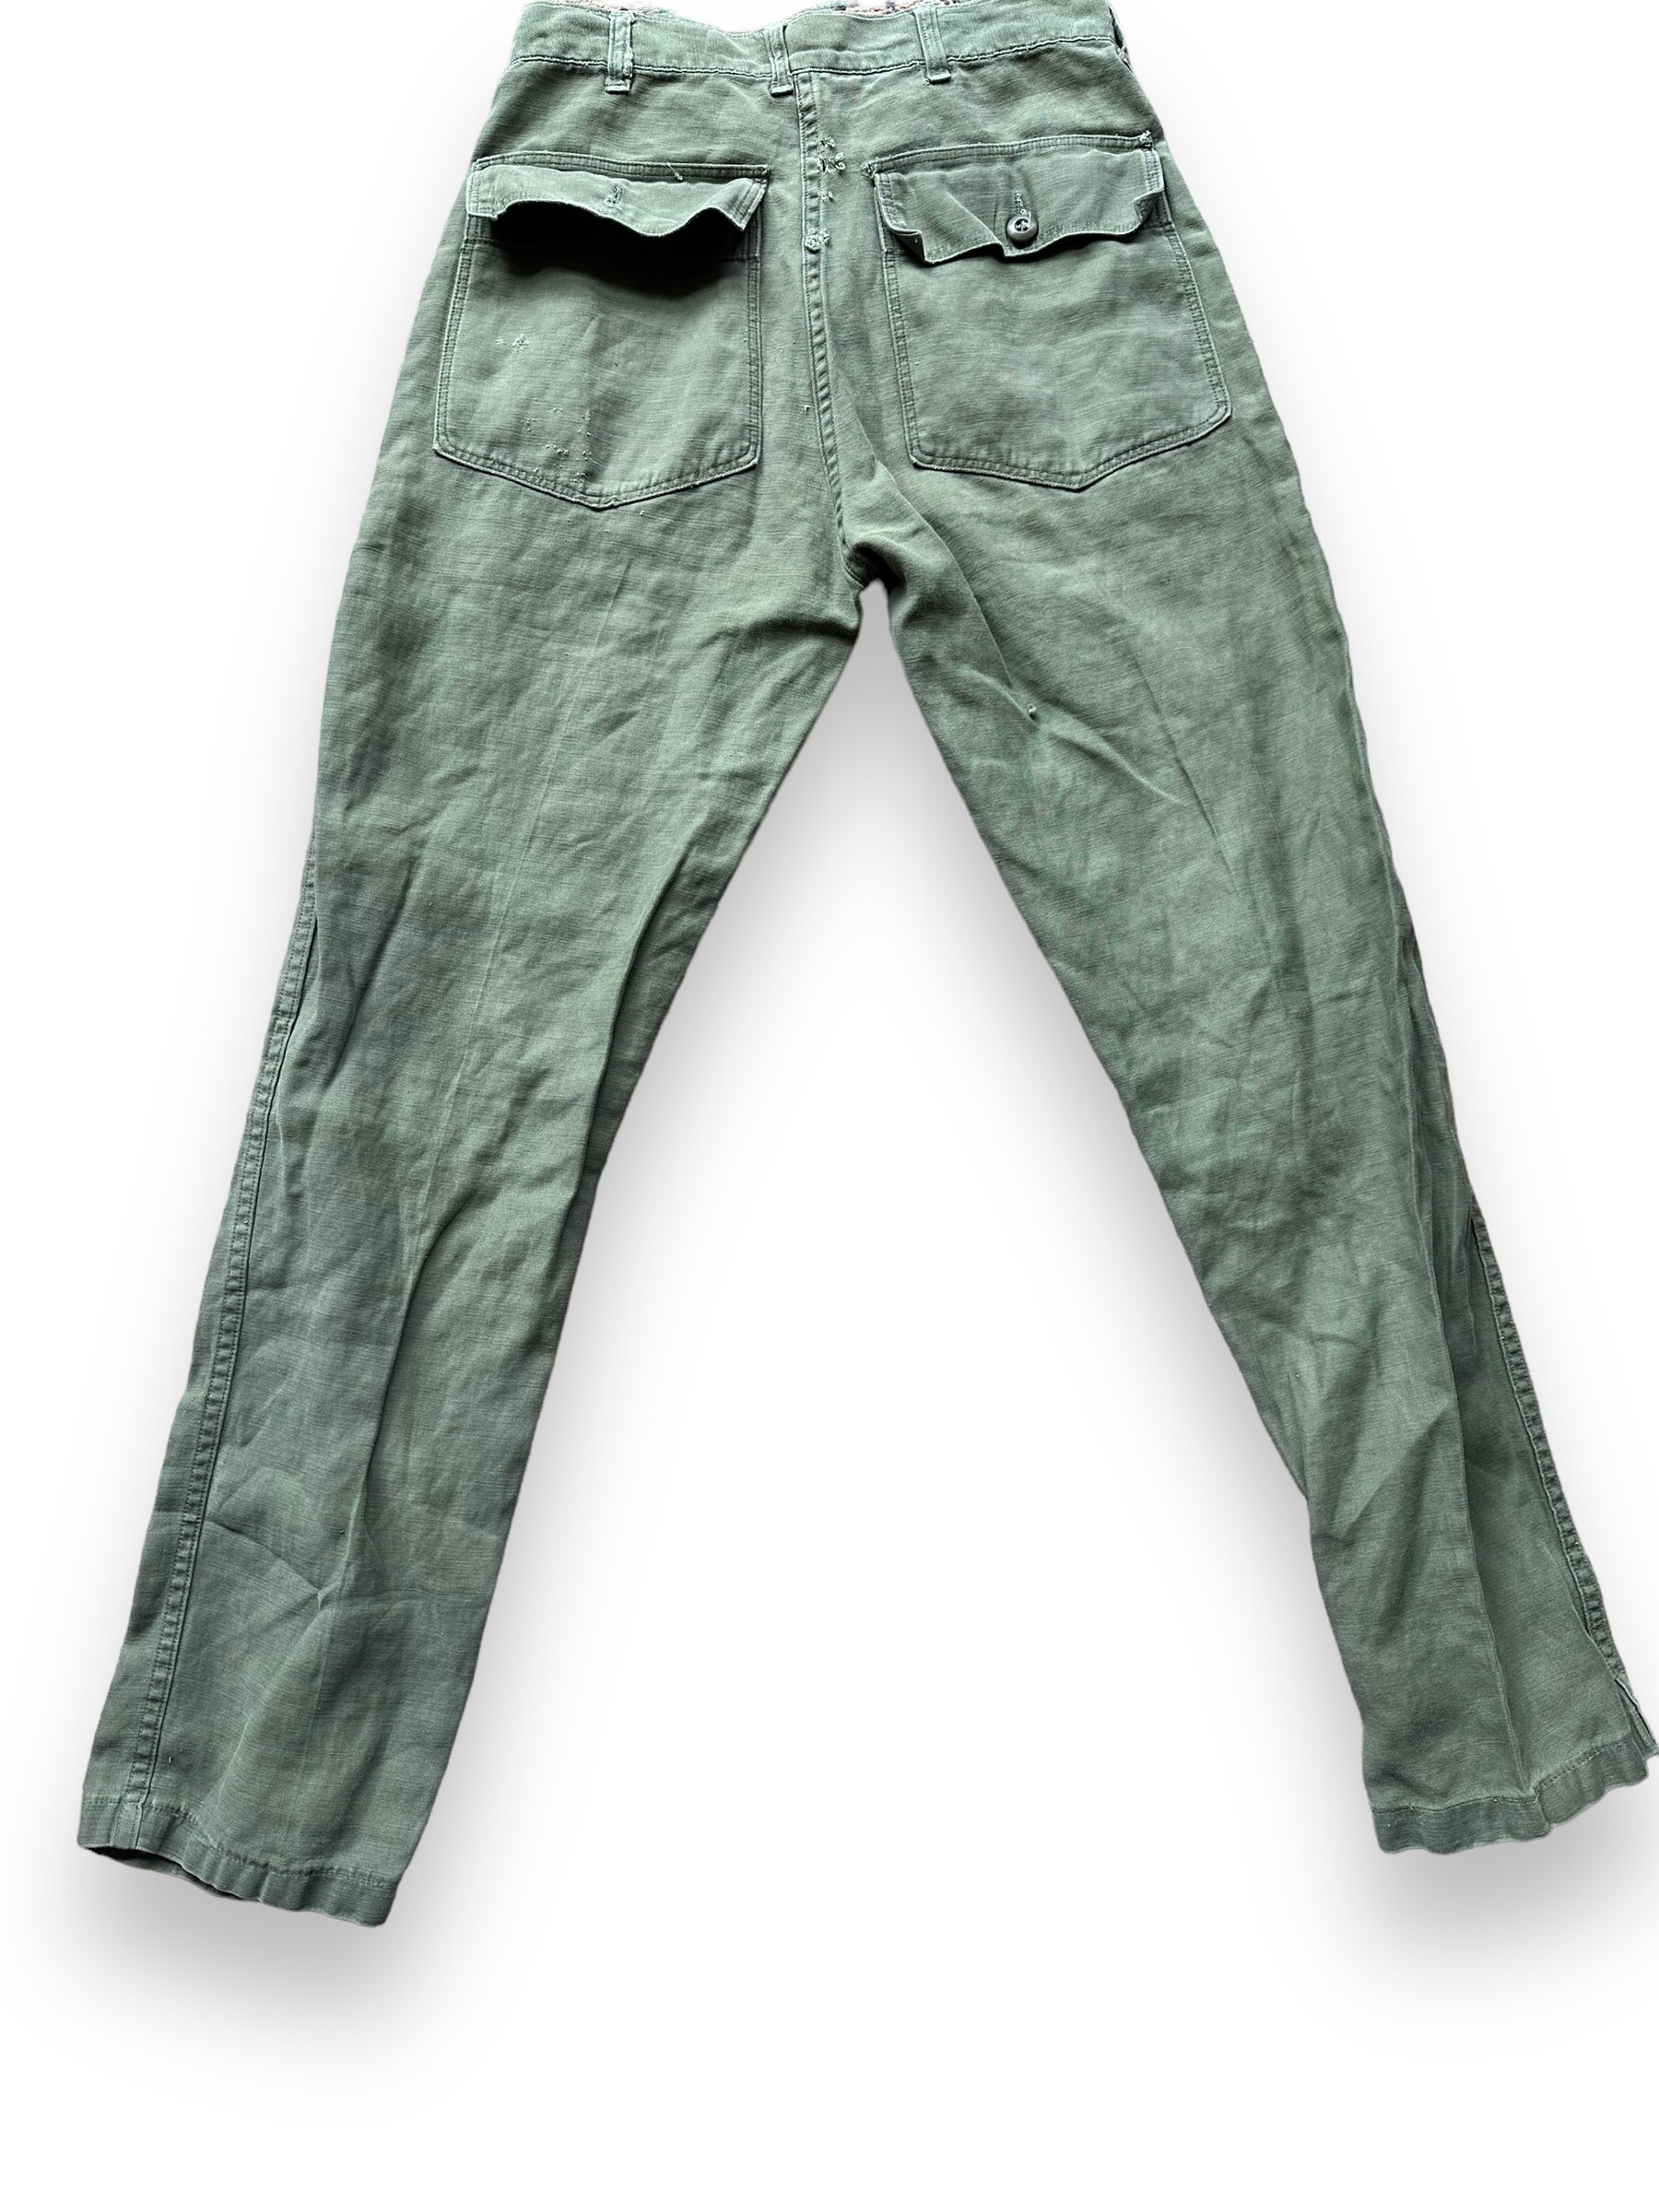 Rear View of Vintage Sateen OG-107's W30 L32.5 | Vintage Viet Nam Era Baker Pants Seattle | Barn Owl Vintage Workwear